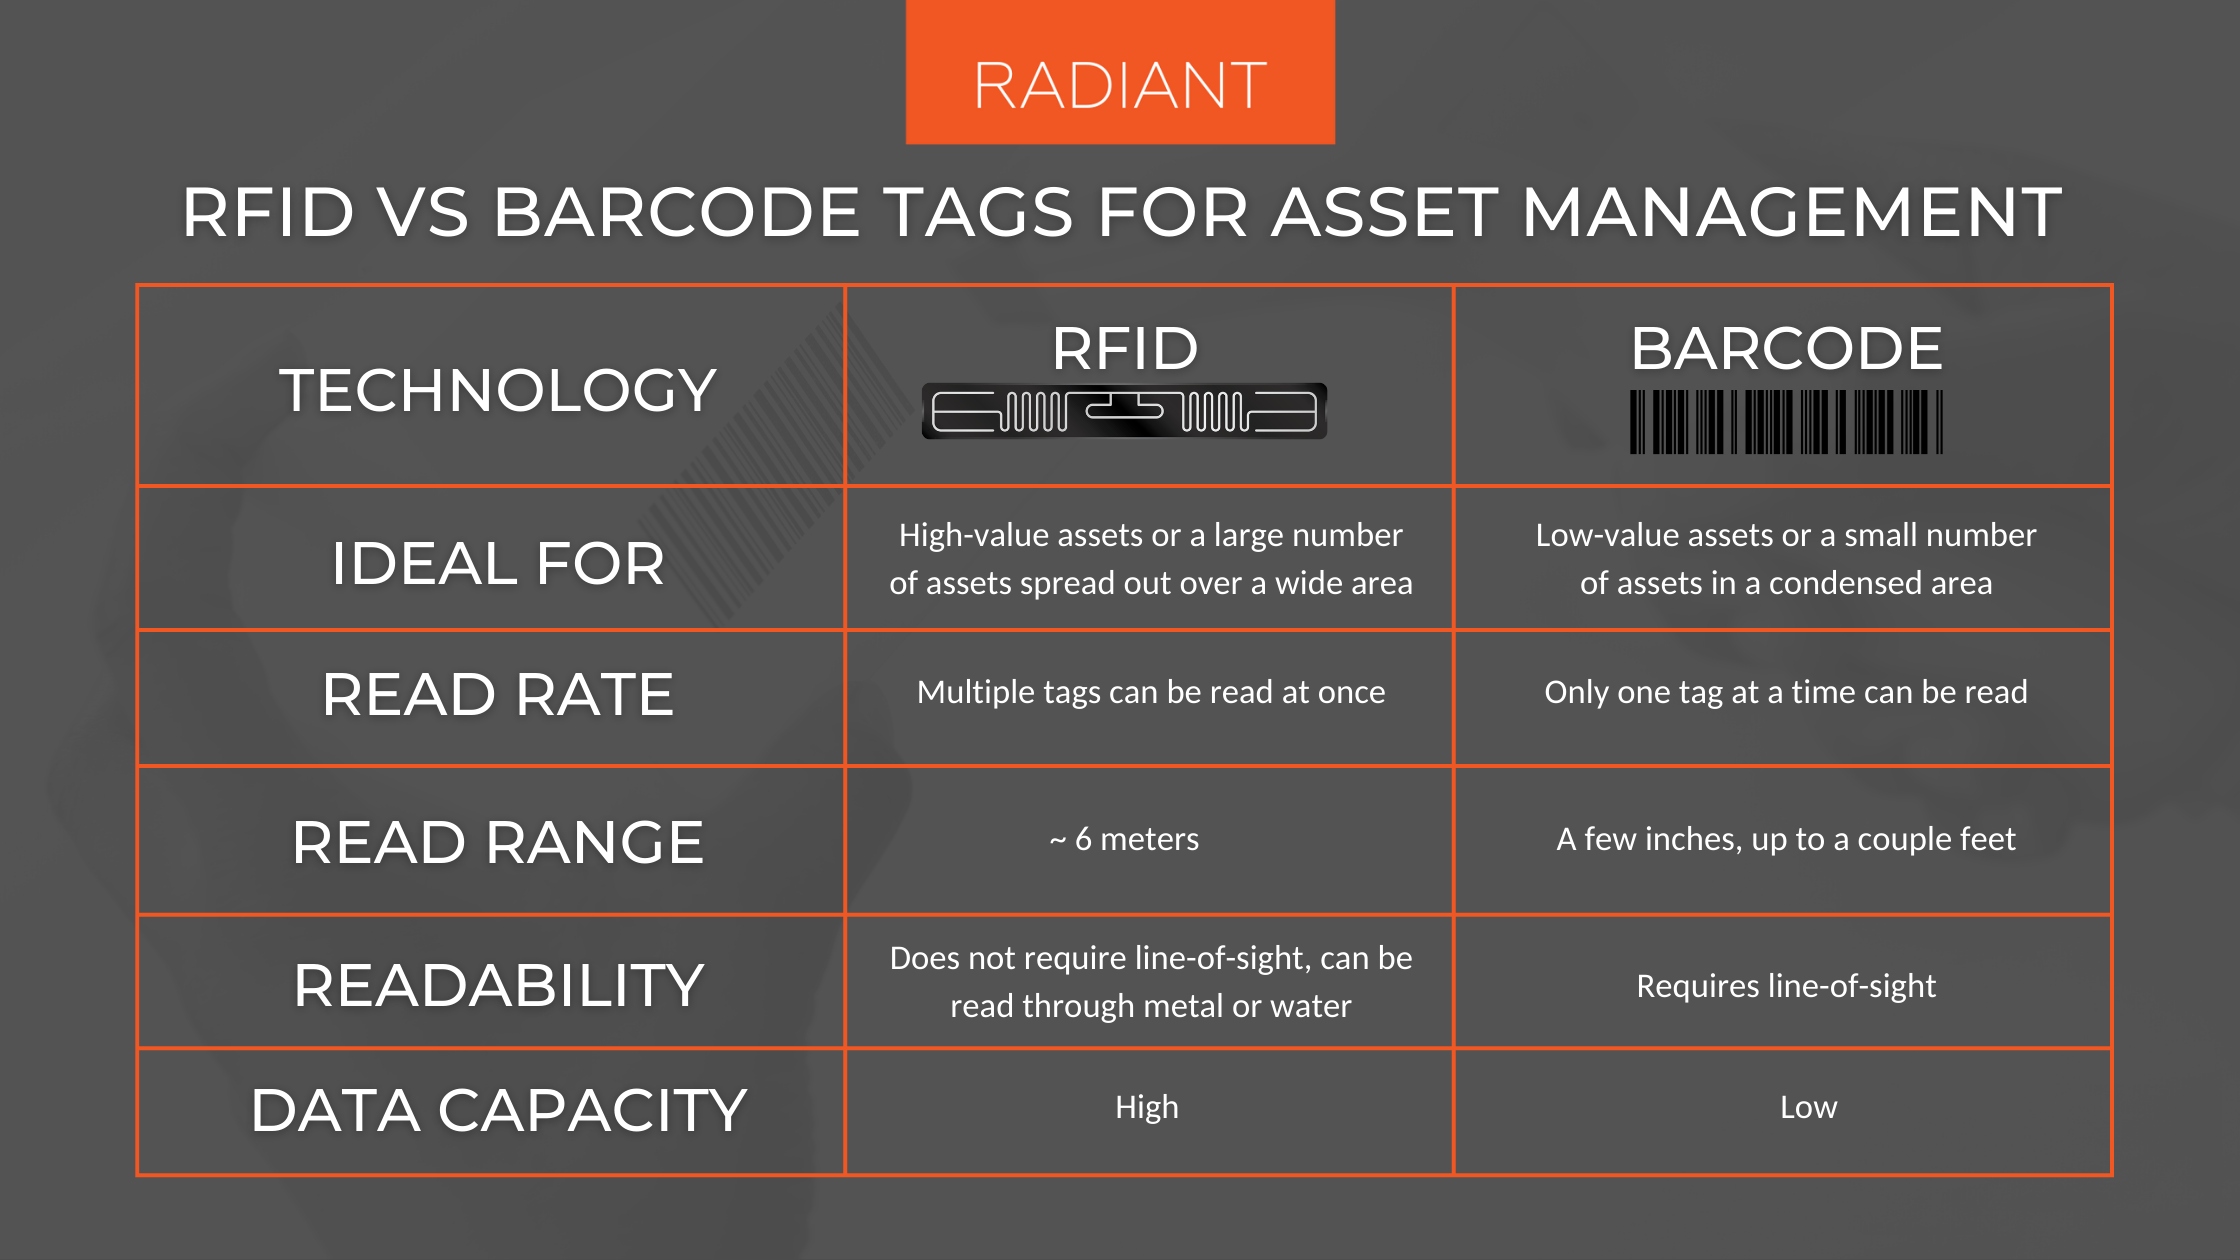 Asset Management Tags - Asset Management Tag Comparison - RFID vs Barcode Technology - RFID vs Bacode - Barcode Technology vs RFID Technology - Barcode vs RFID - RFID vs Barcodes Advantages and Disadvantages